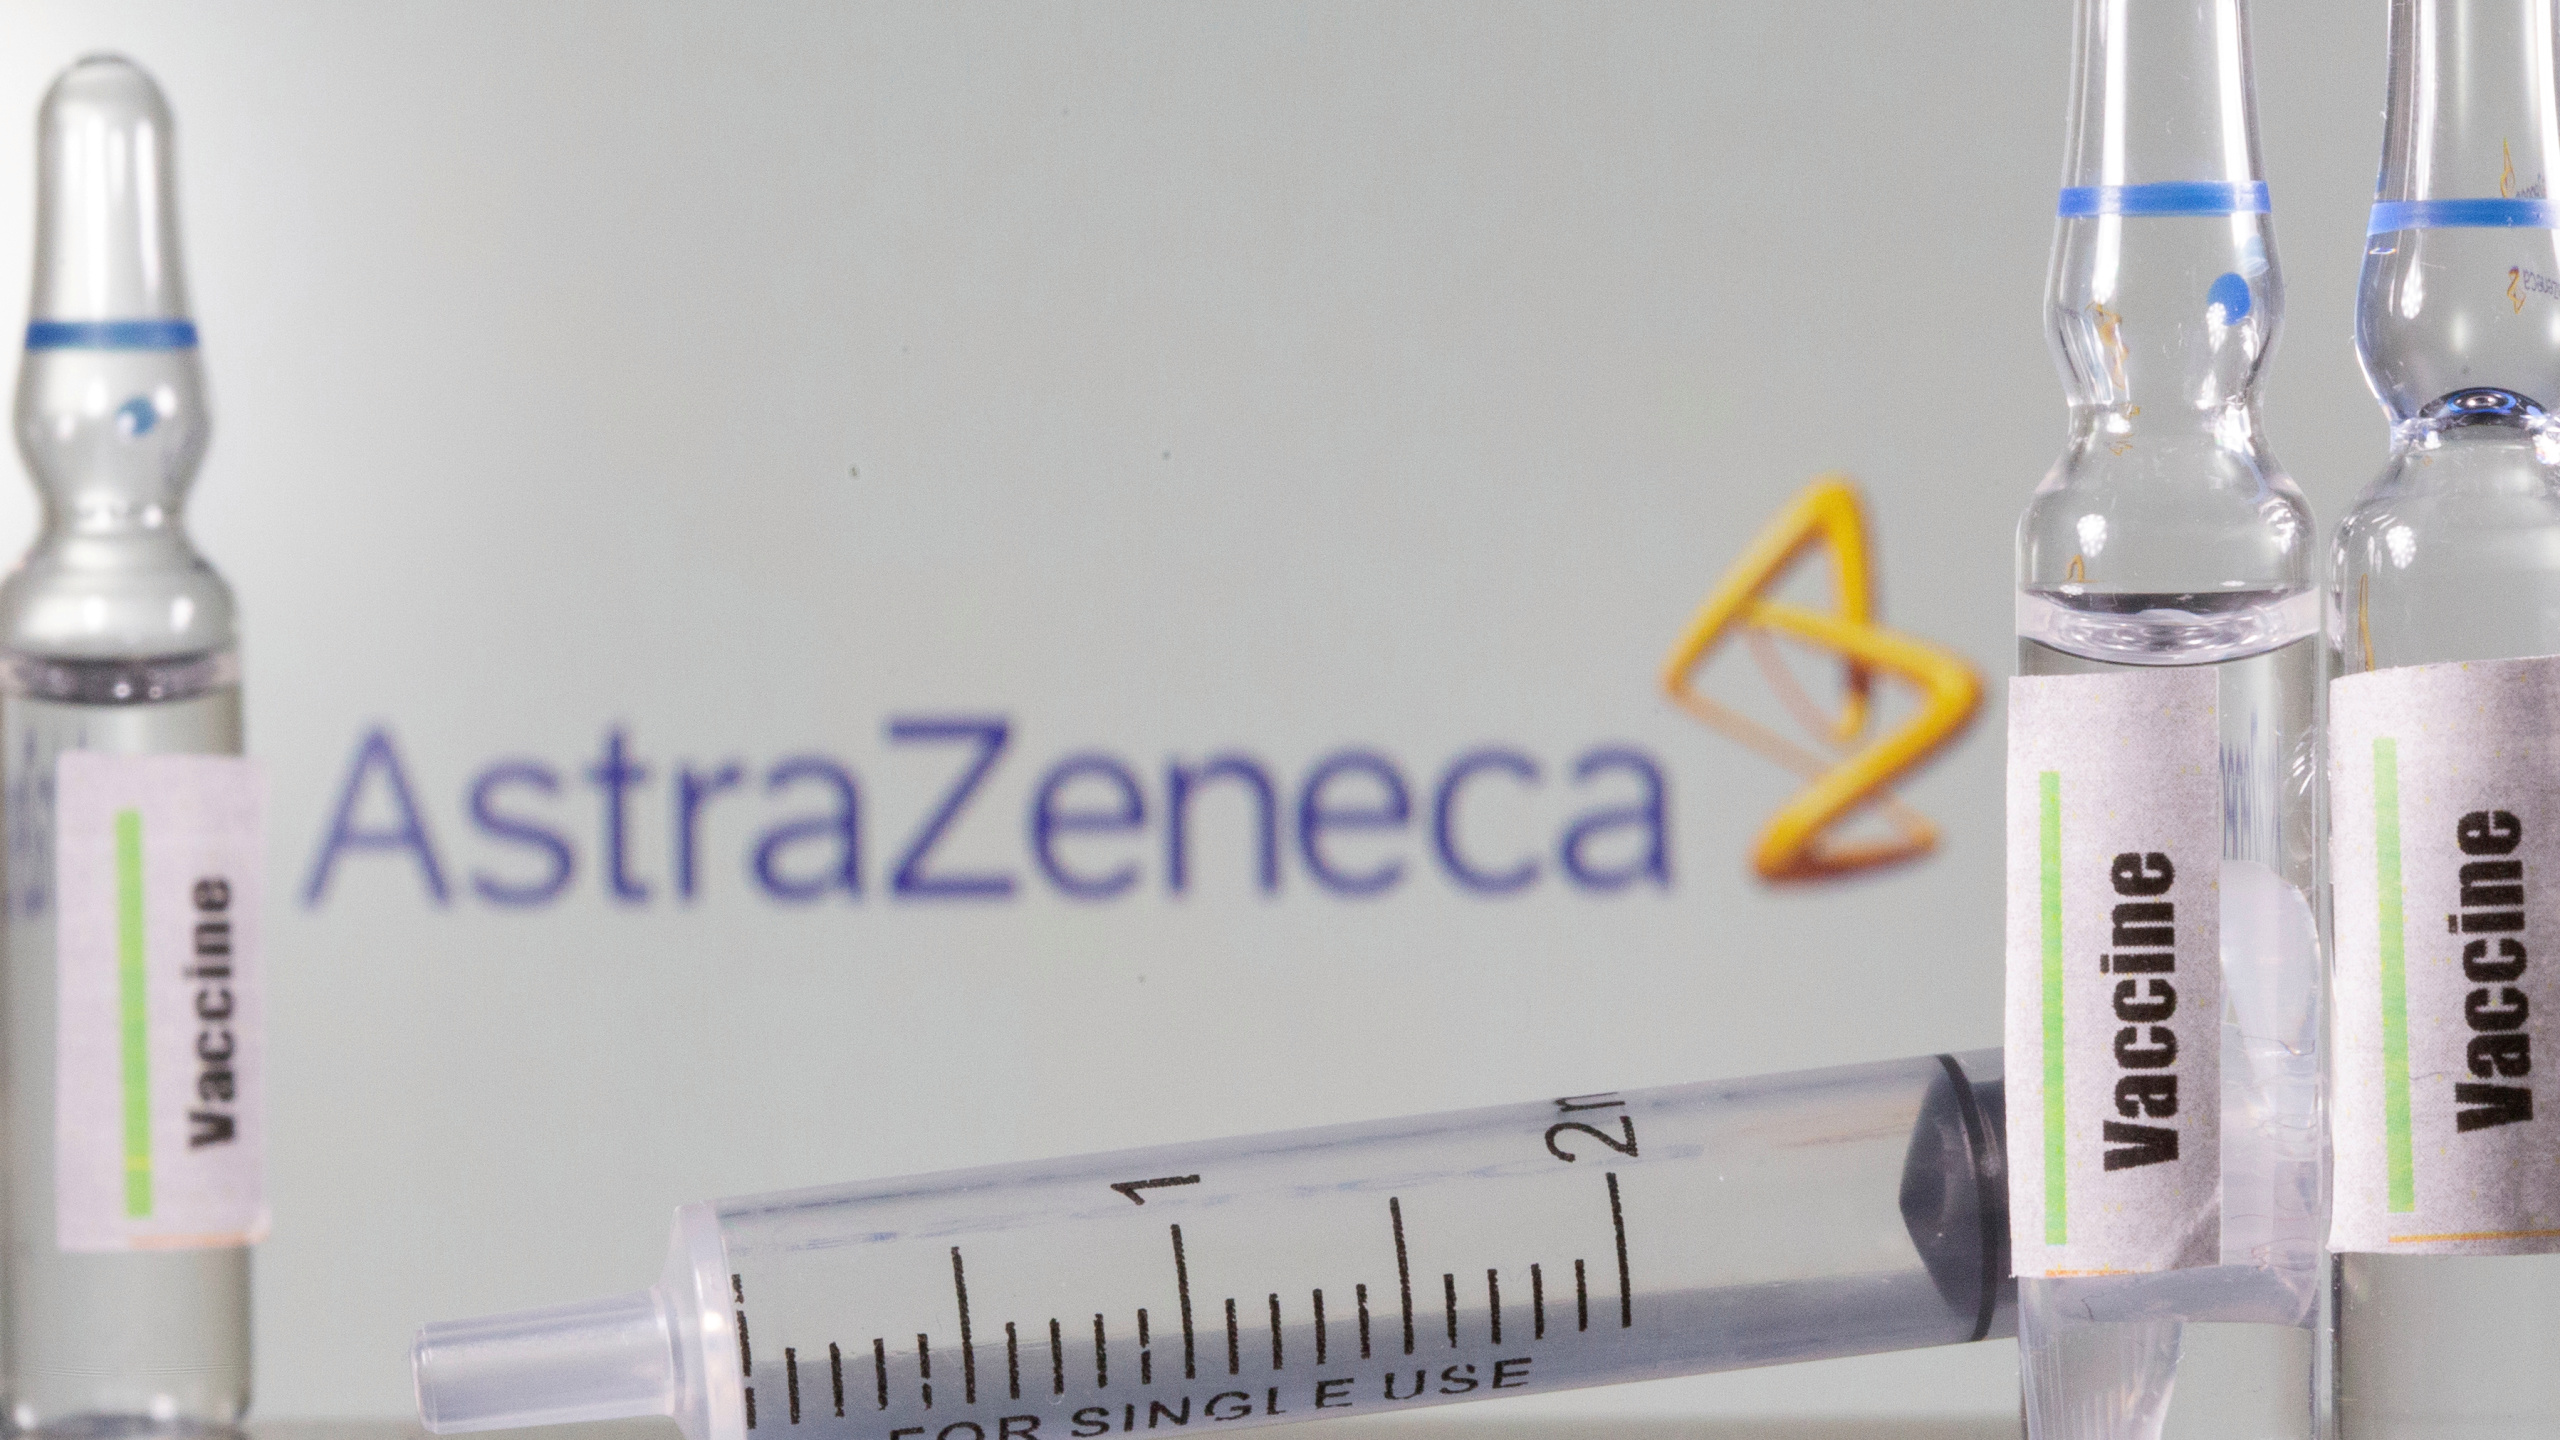 Astrazeneca - تاثیر واکسن آسترازنکا بر افراد مسن، باعث افزایش امیدواری ها شده است